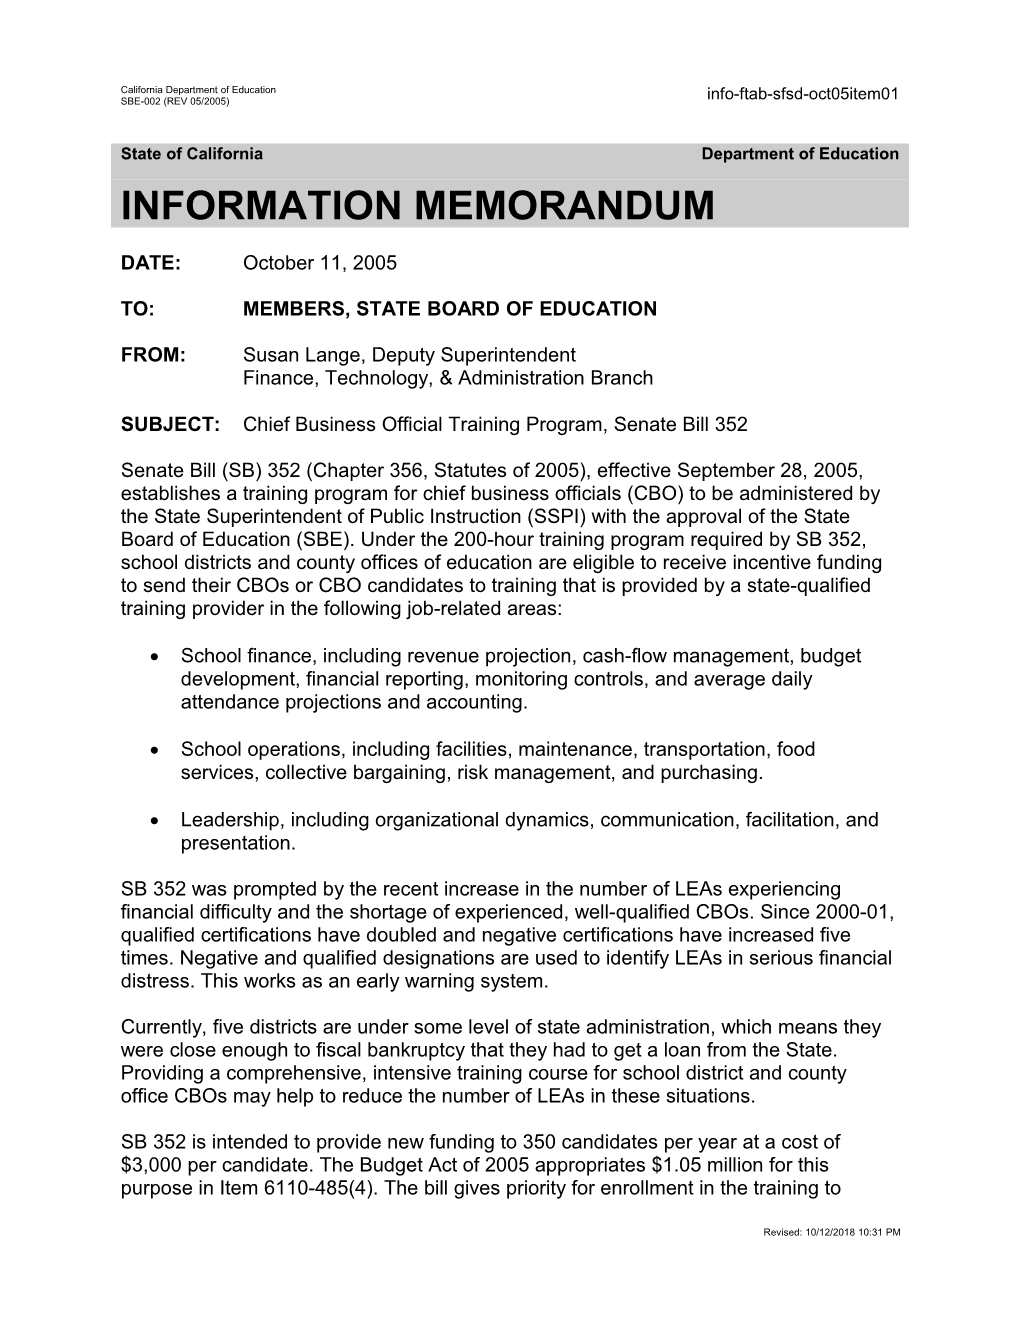 October 2005 SFSD Item 1 - Information Memorandum (CA State Board of Education)